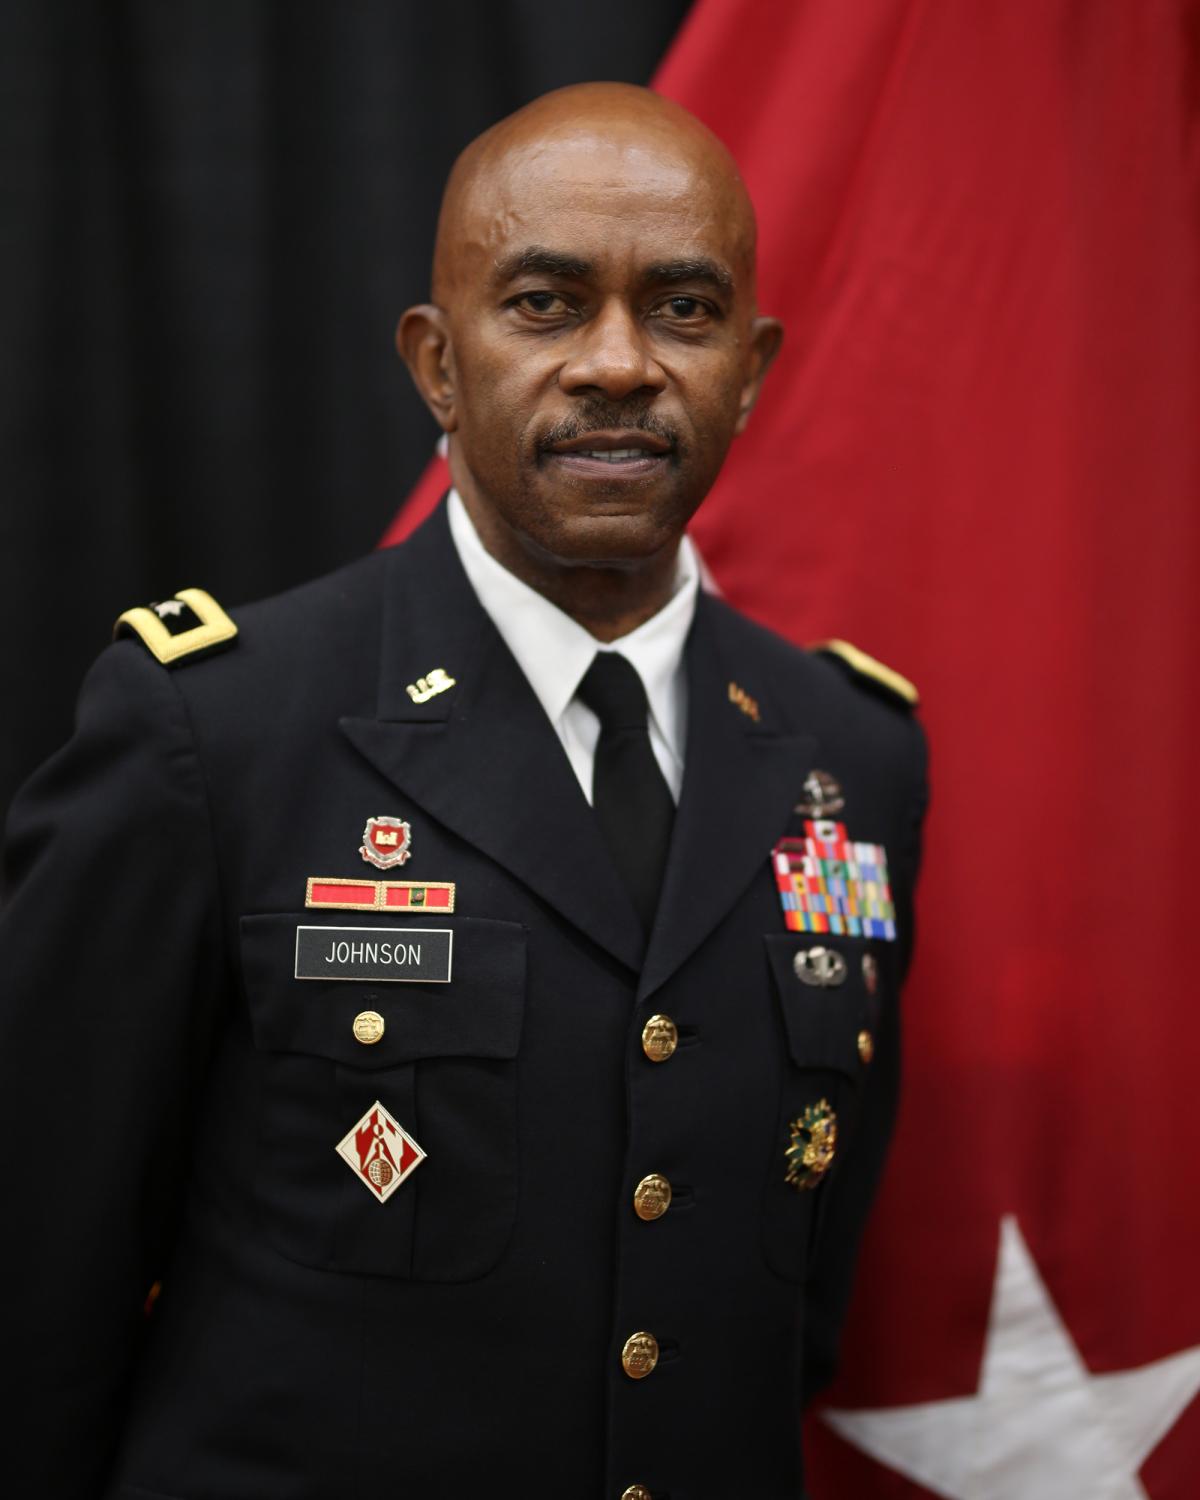 Ronald Johnson in his Army dress uniform.